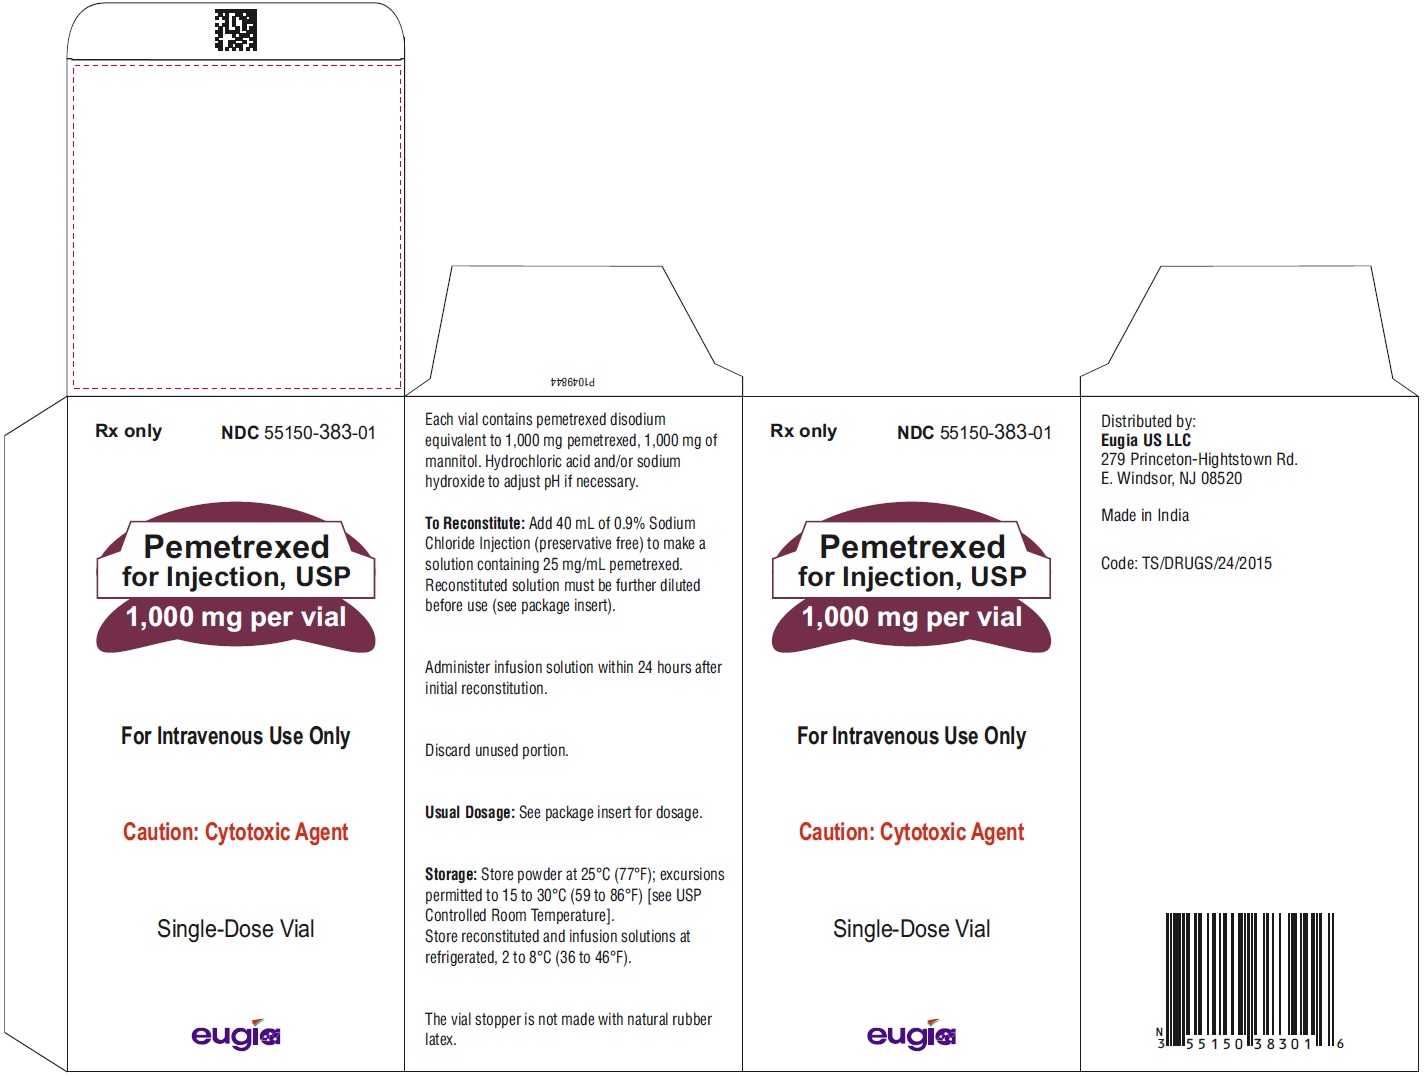 PACKAGE LABEL-PRINCIPAL DISPLAY PANEL- 1,000 mg per Vial - Container Carton